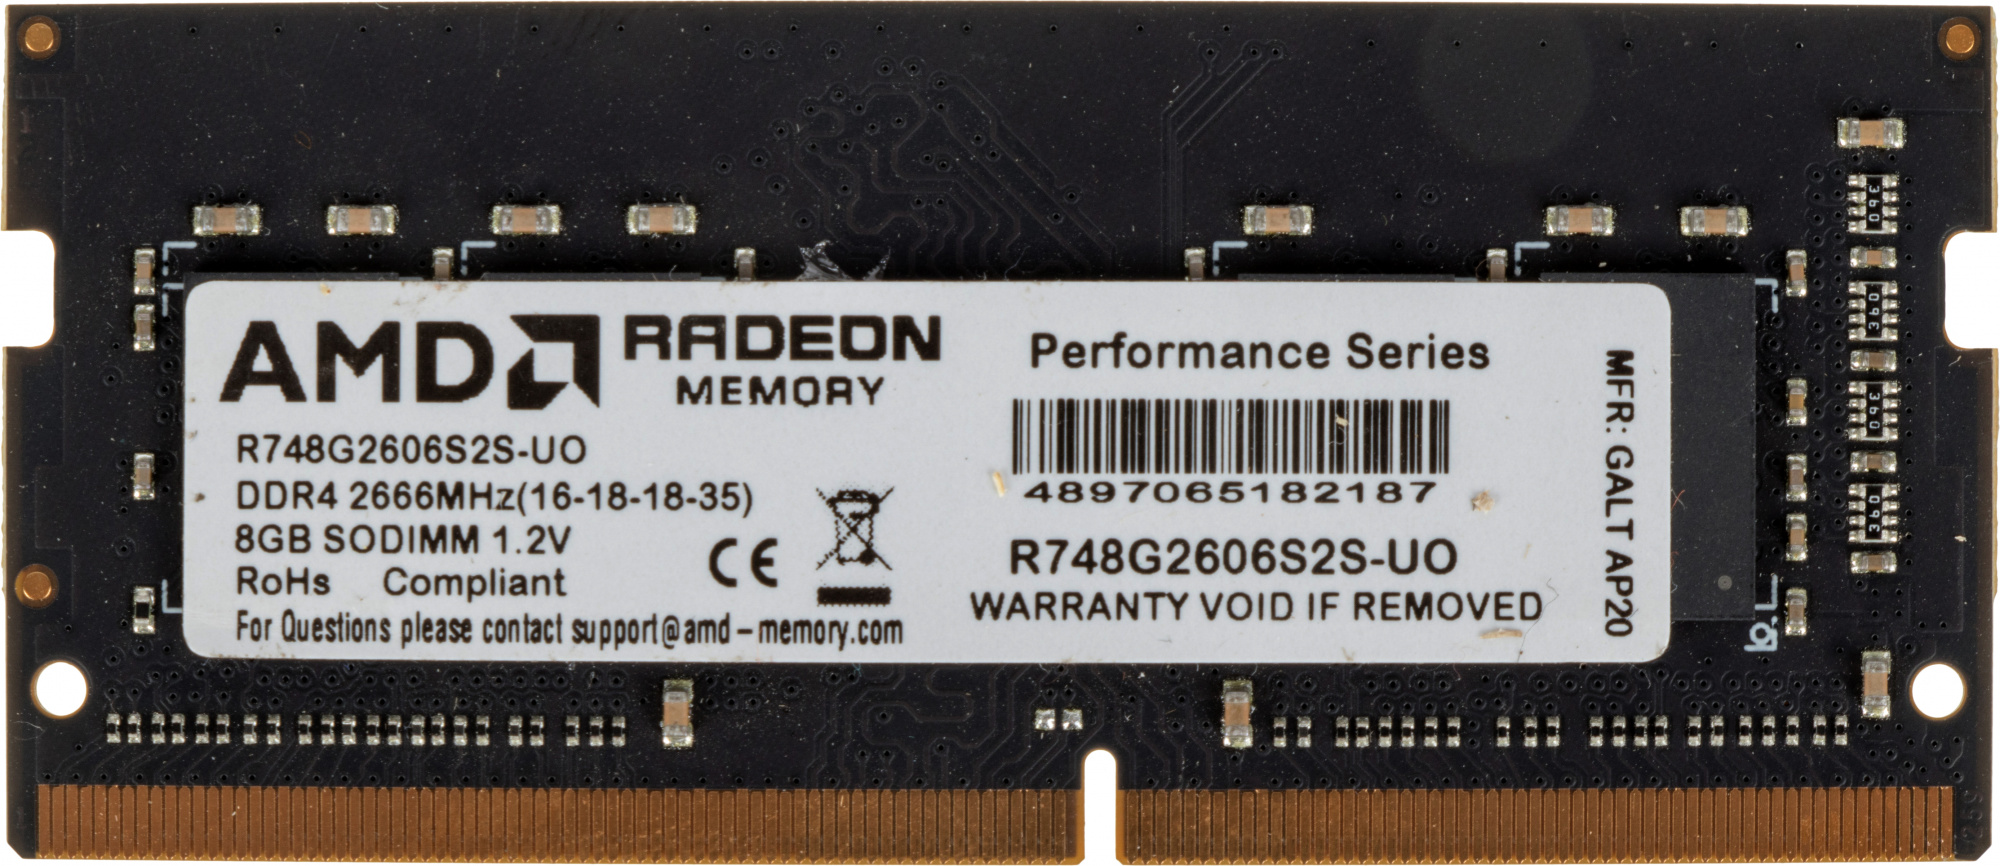 Radeon r7 ddr4. Оперативная память AMD so-DIMM ddr4 8gb 2666mhz PC-21300 (r748g2606s2s-uo) ОЕМ. Оперативная память SODIMM AMD Radeon r7 [r748g2606s2s-uo] 8 ГБ. Оперативная память AMD Radeon r7 Performance Series 8 ГБ ddr4. Оперативная память SODIMM AMD Radeon r7 [r748g2606s2s-u] 8 ГБ.